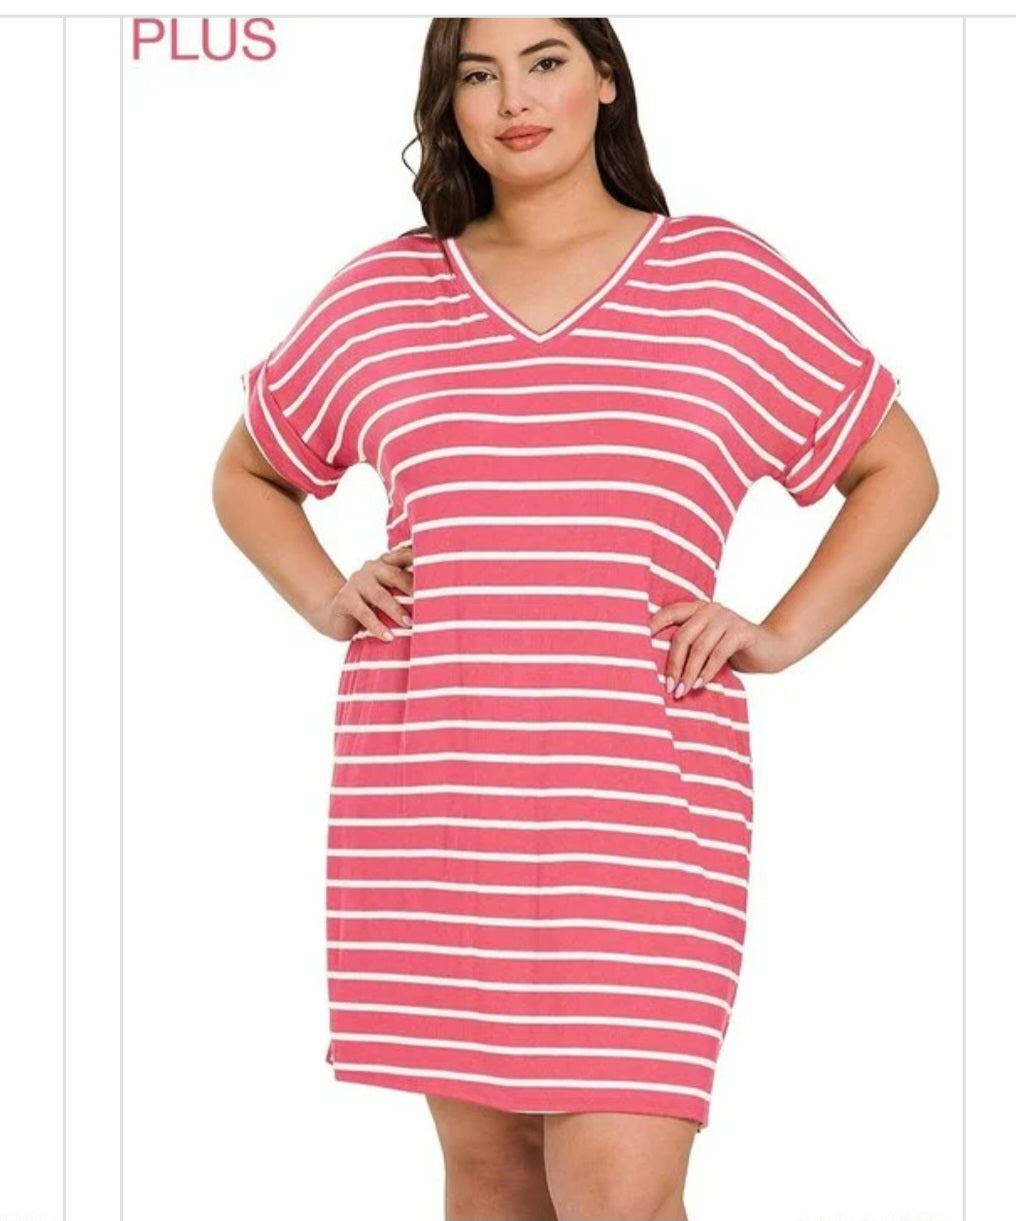 Plus Stripe Short Sleeve V-Neck Tee Shirt Dress